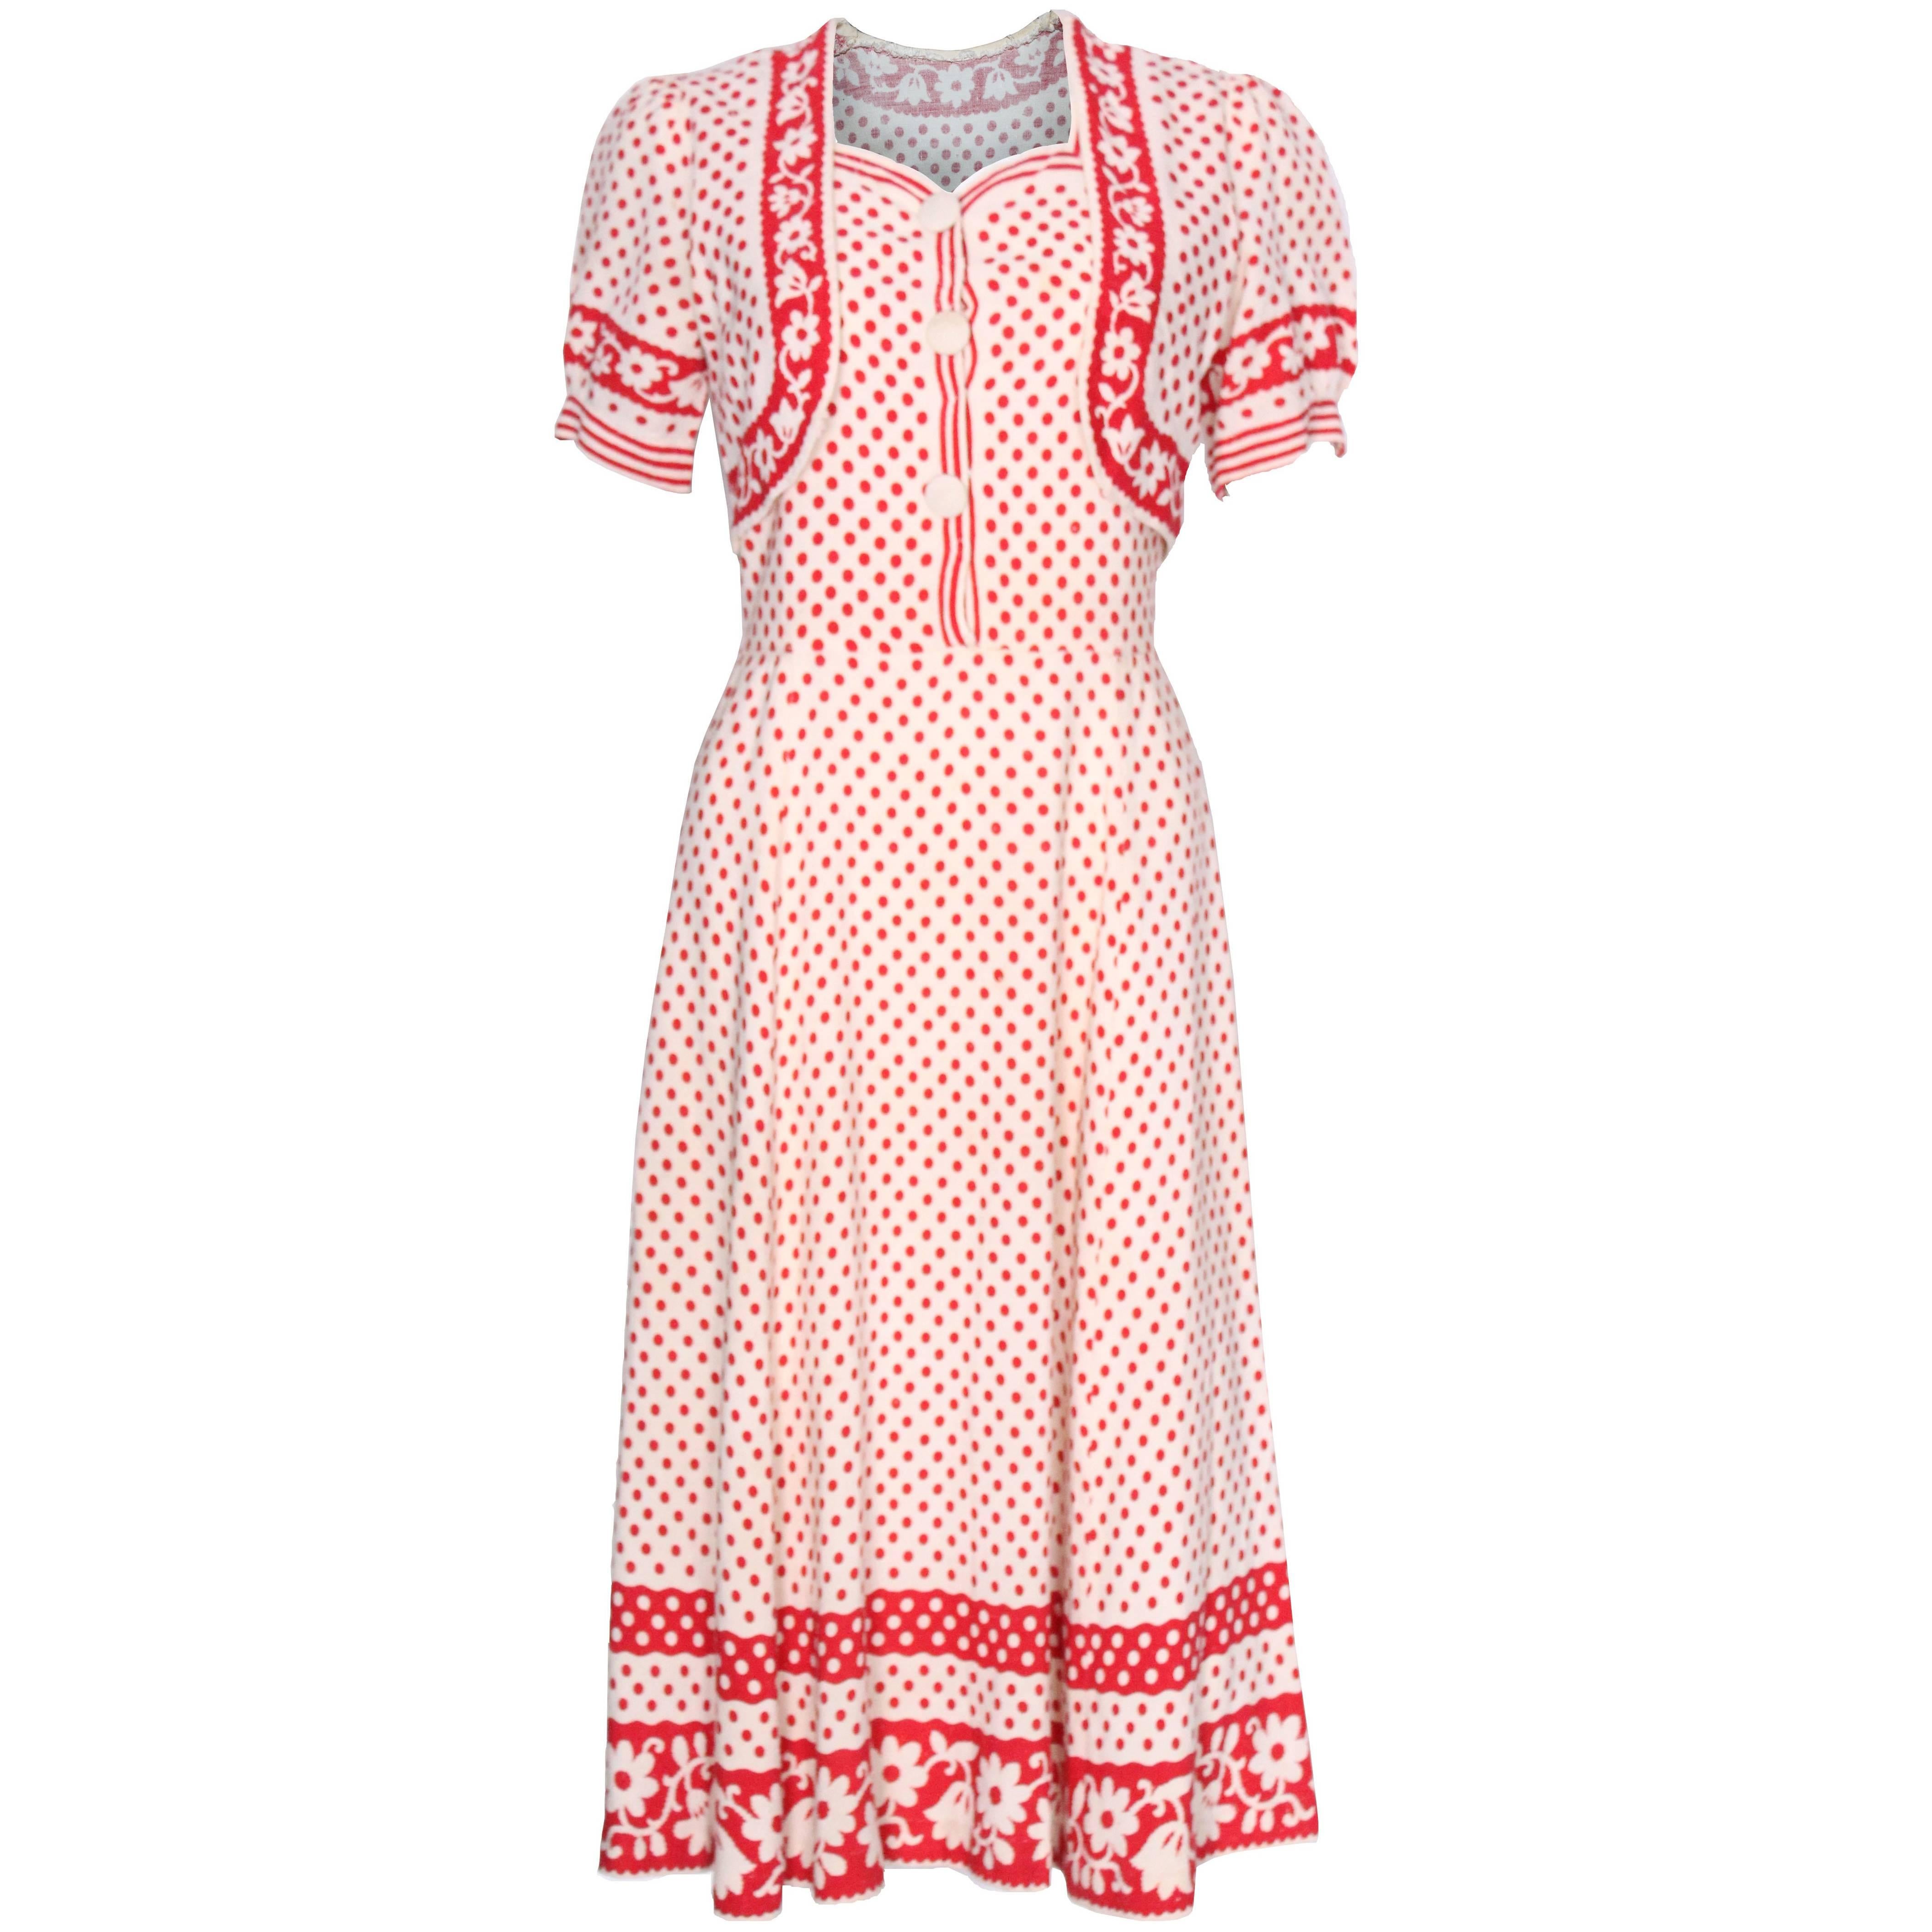 1940s Red & White Polka Dot Tea Dress